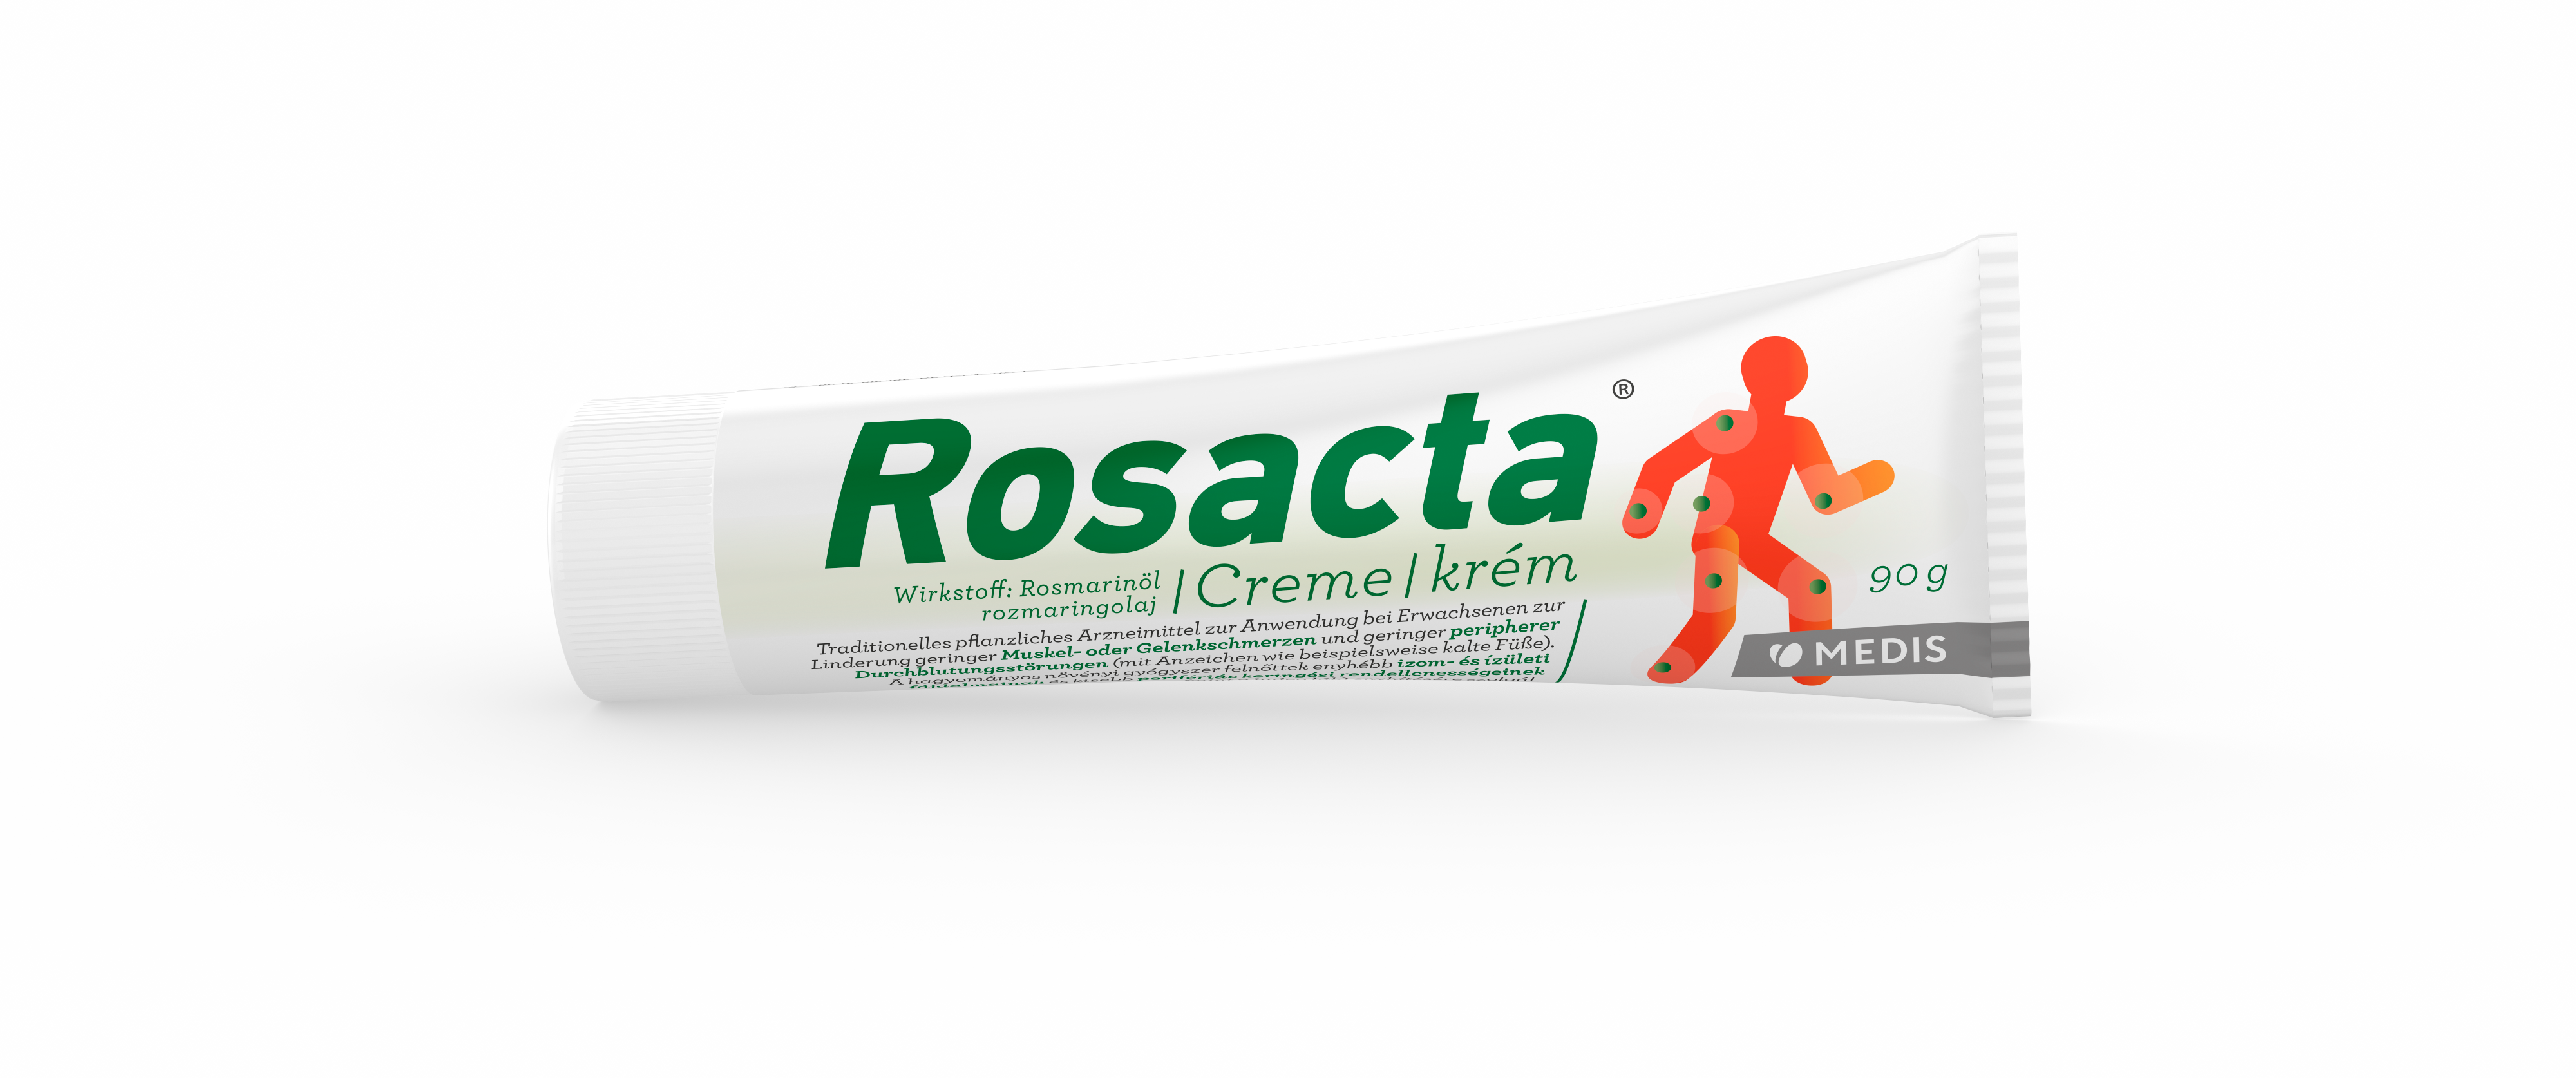 Rosacta - Creme